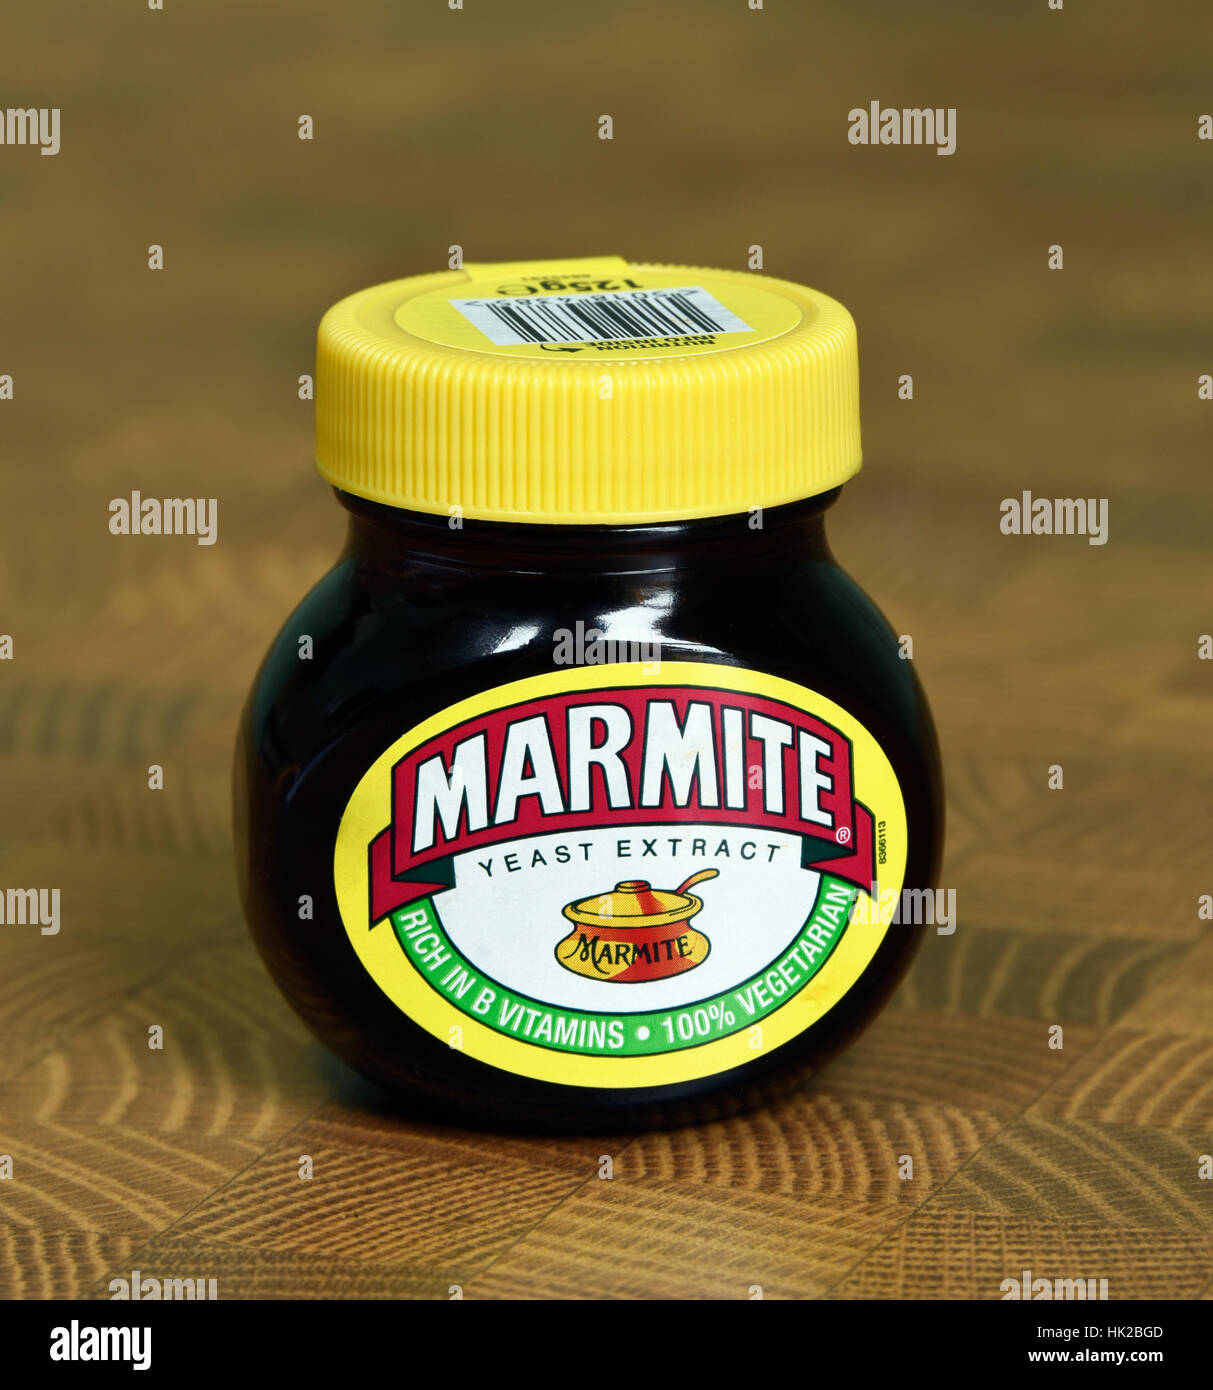 Jar of Marmite Yeast Extract. Stock Photo